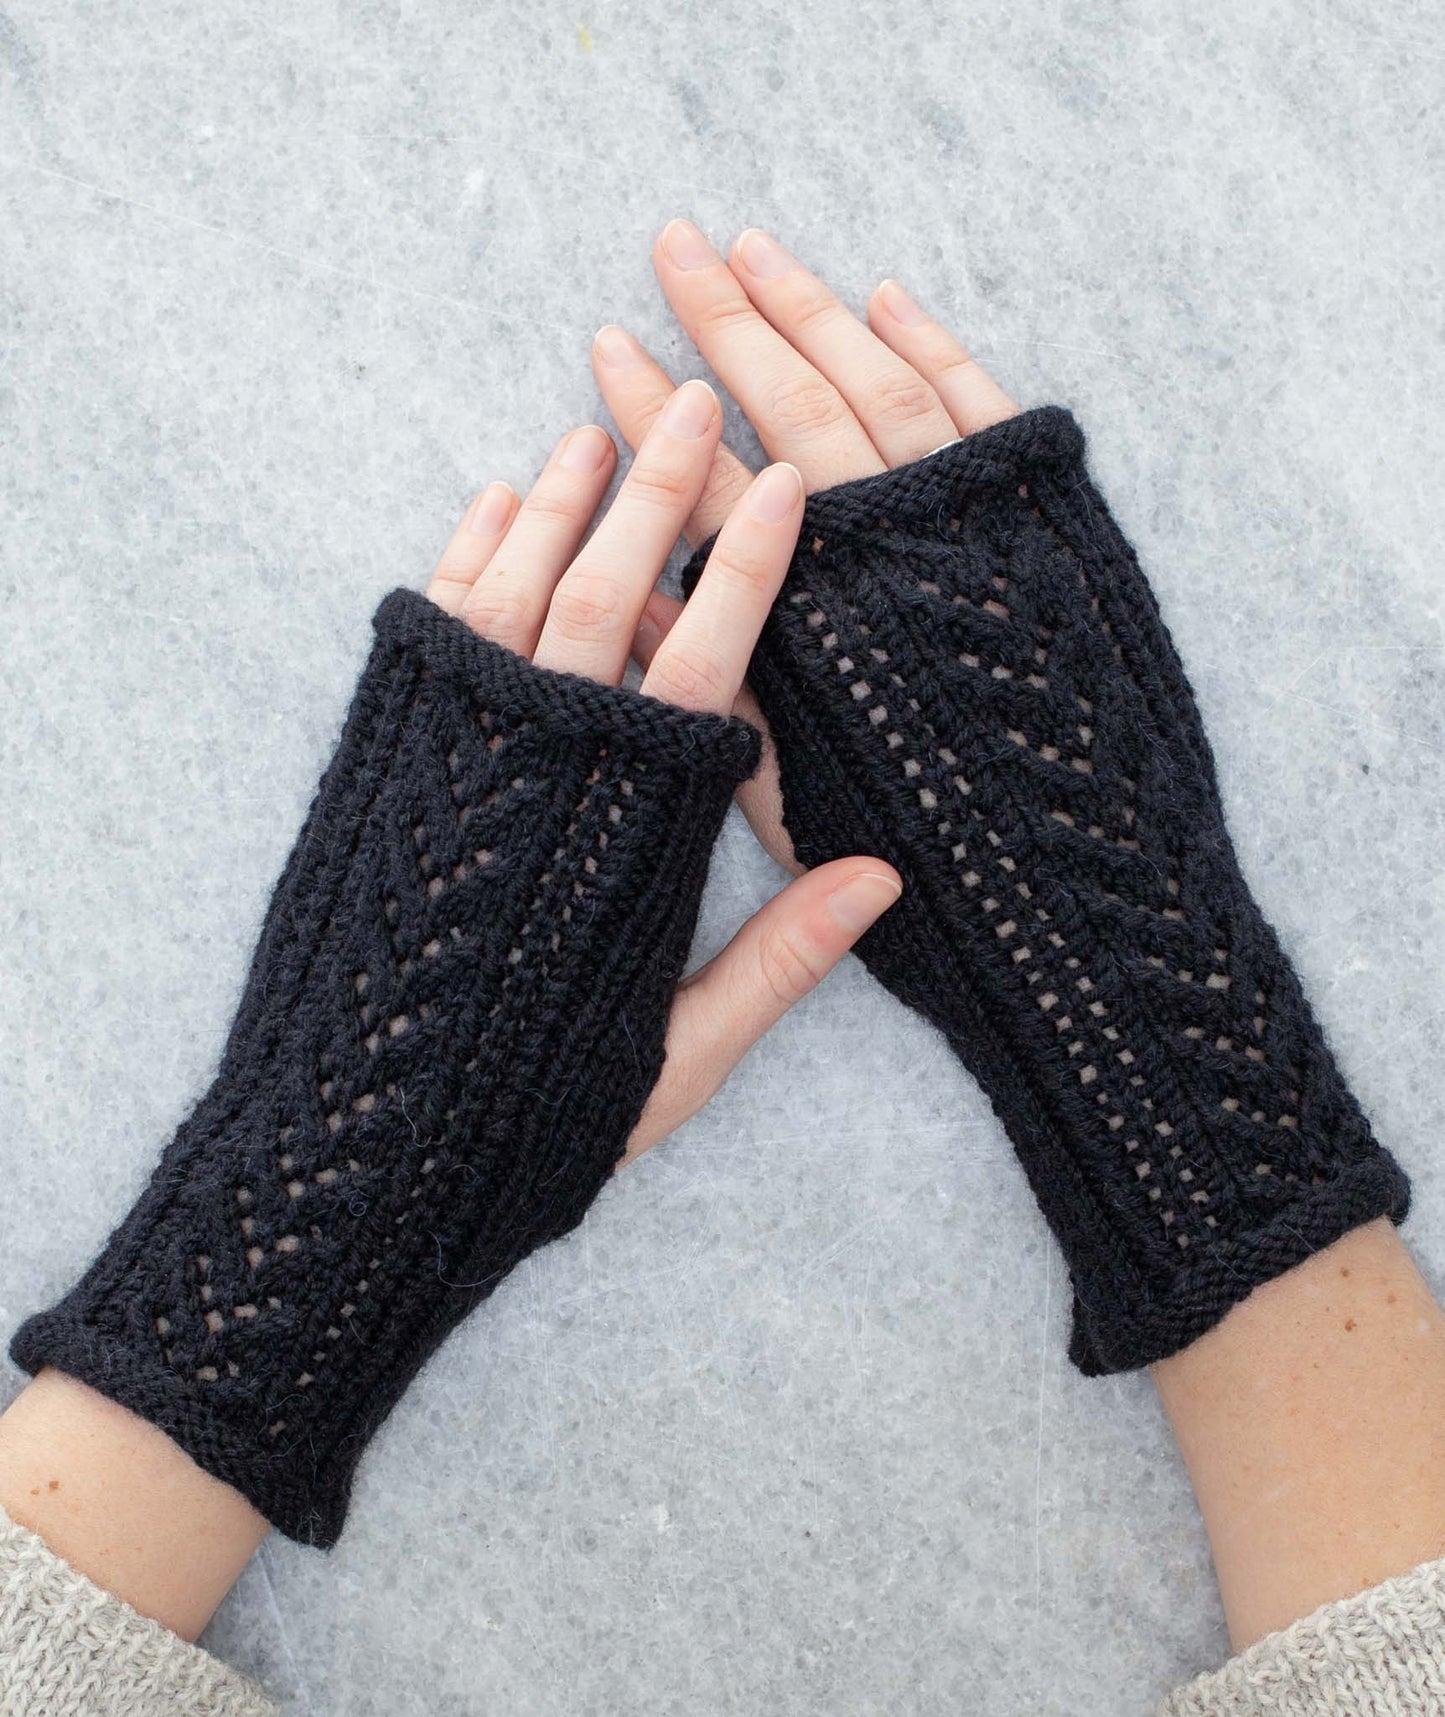 Lace-Back Fingerless Gloves Using Rowan Alpaca Soft DK